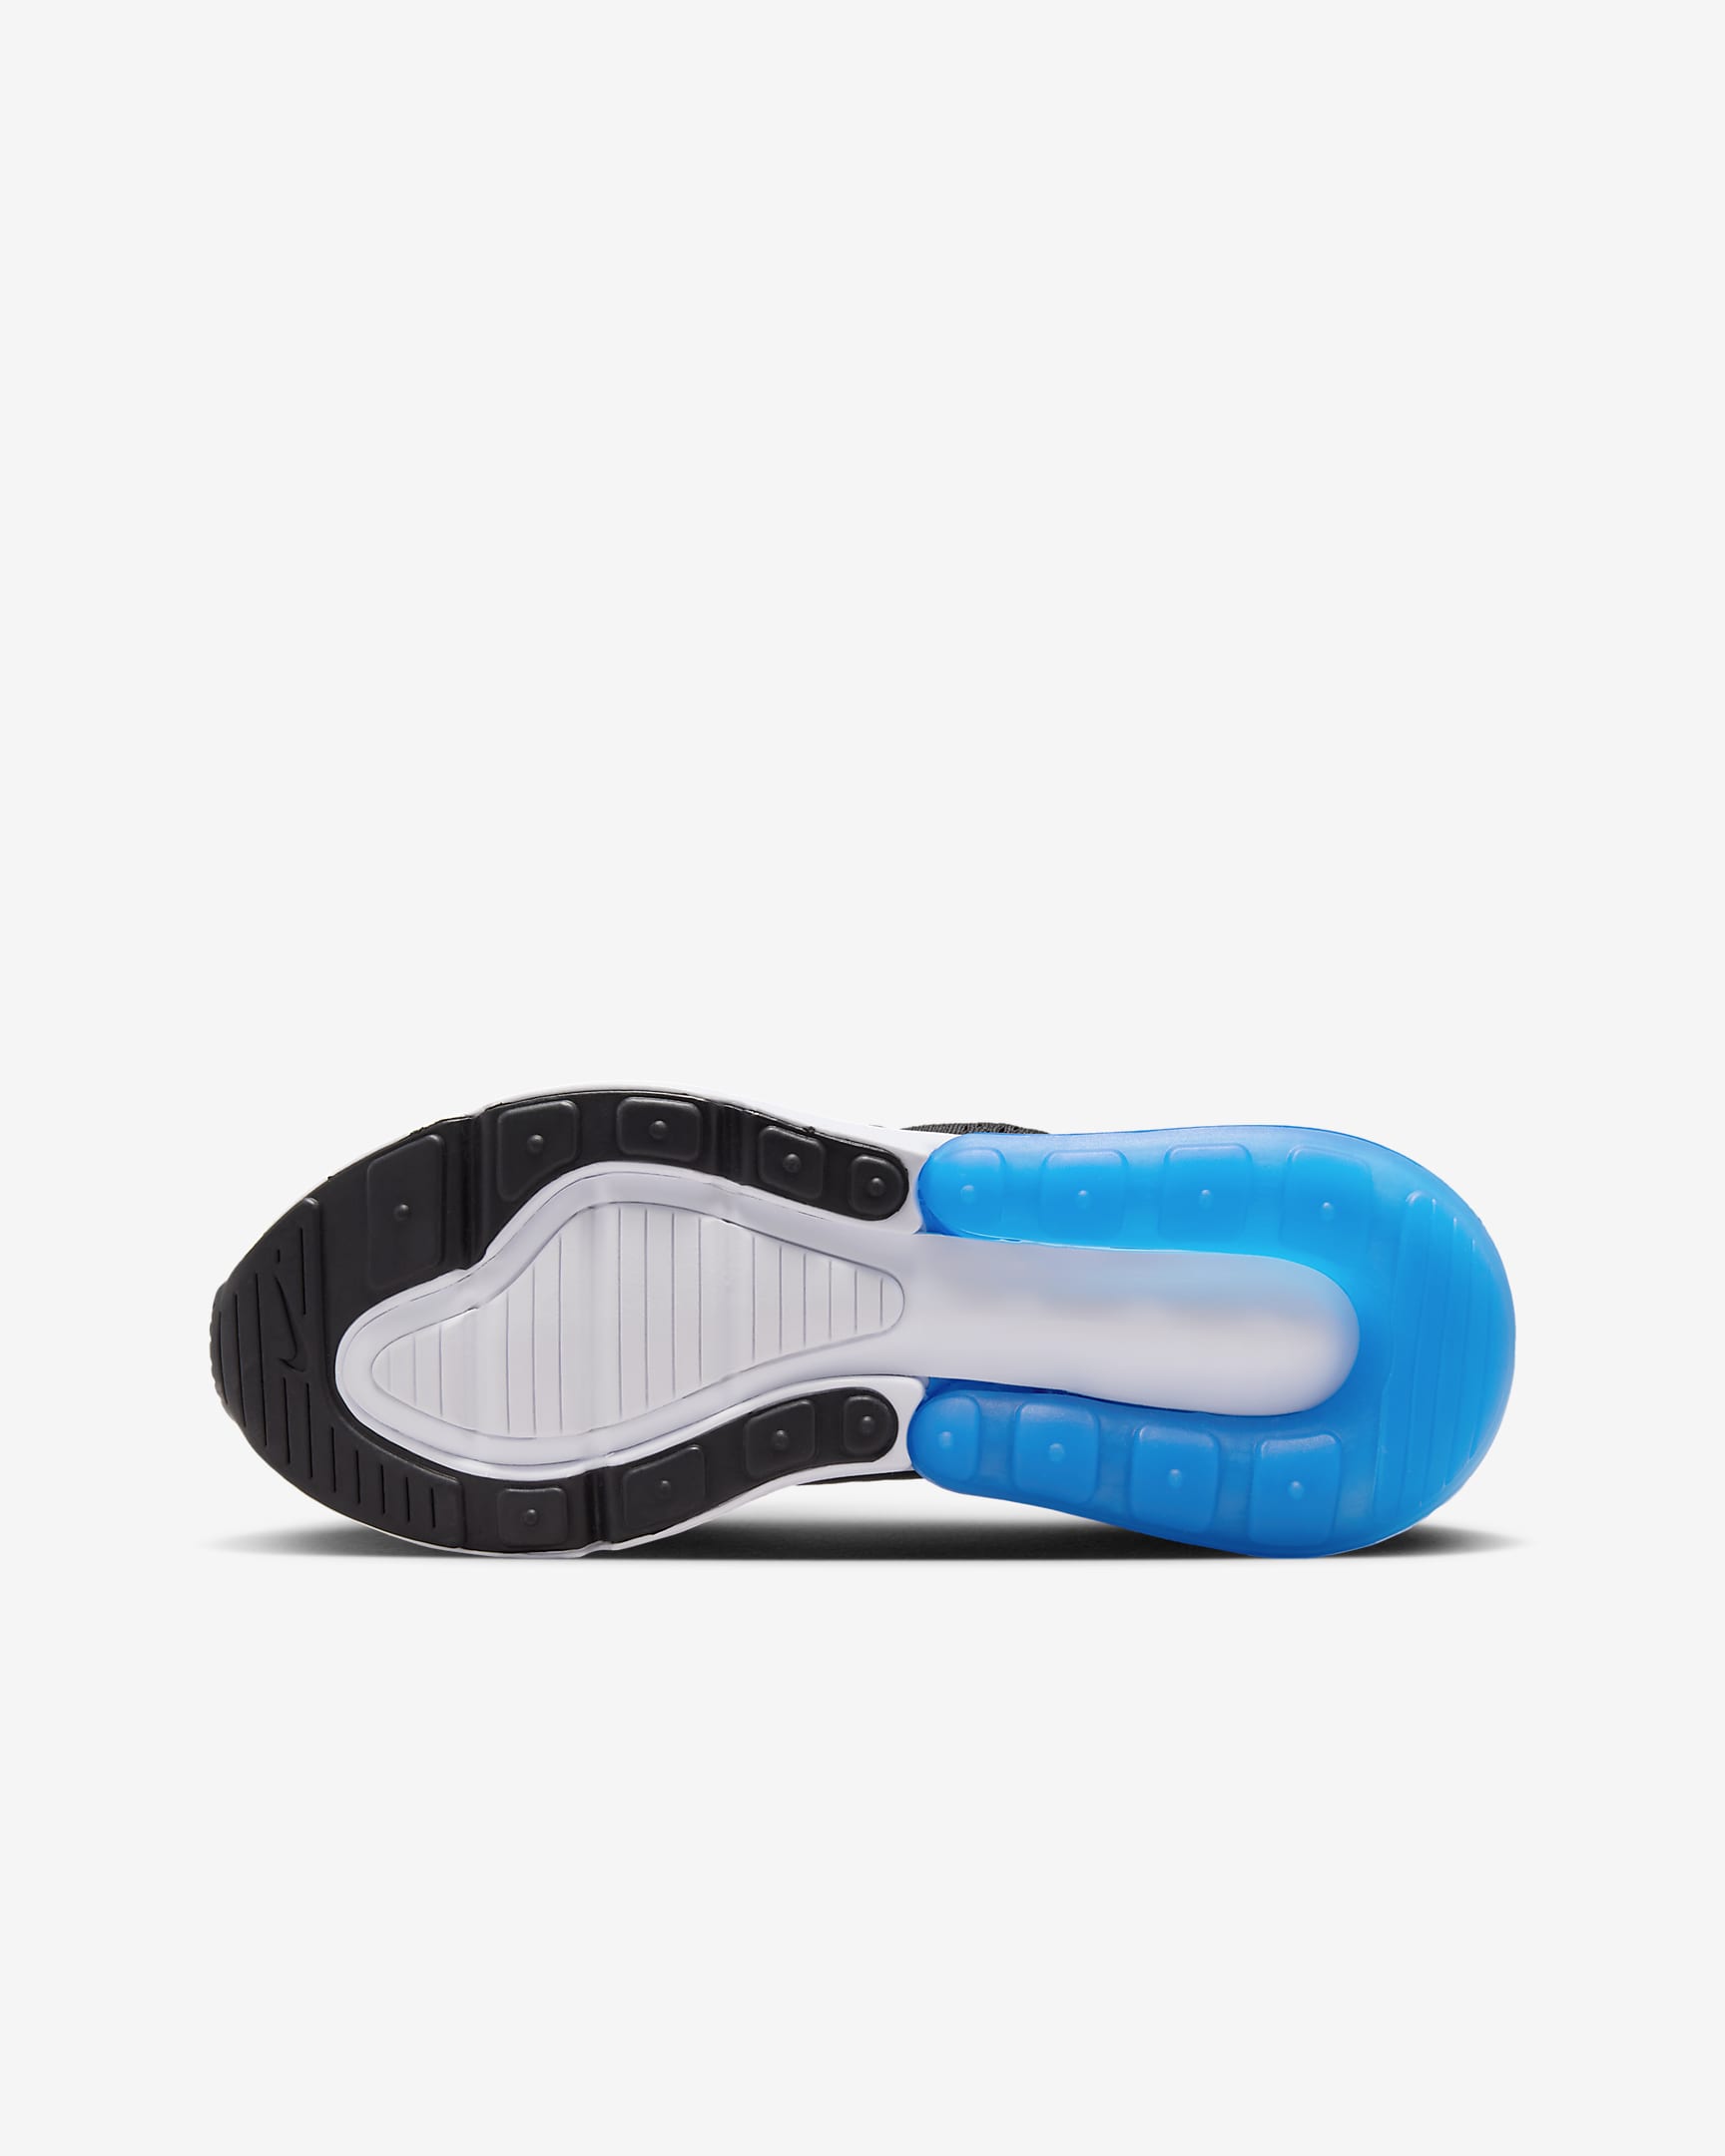 Nike Air Max 270 Big Kids' Shoes - Anthracite/Black/White/Light Photo Blue